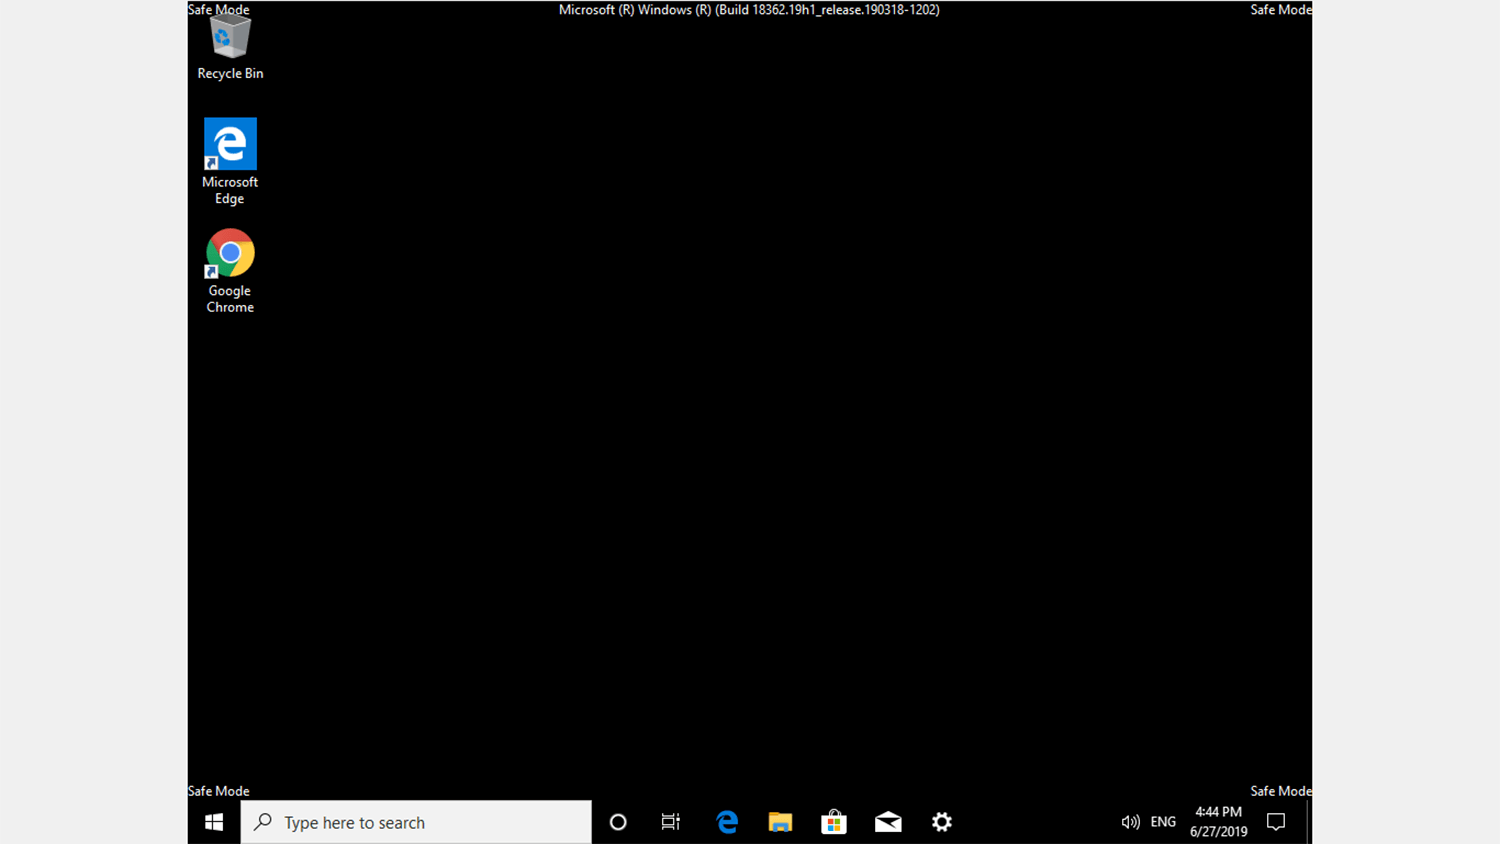 windows 10 safe mode desktop